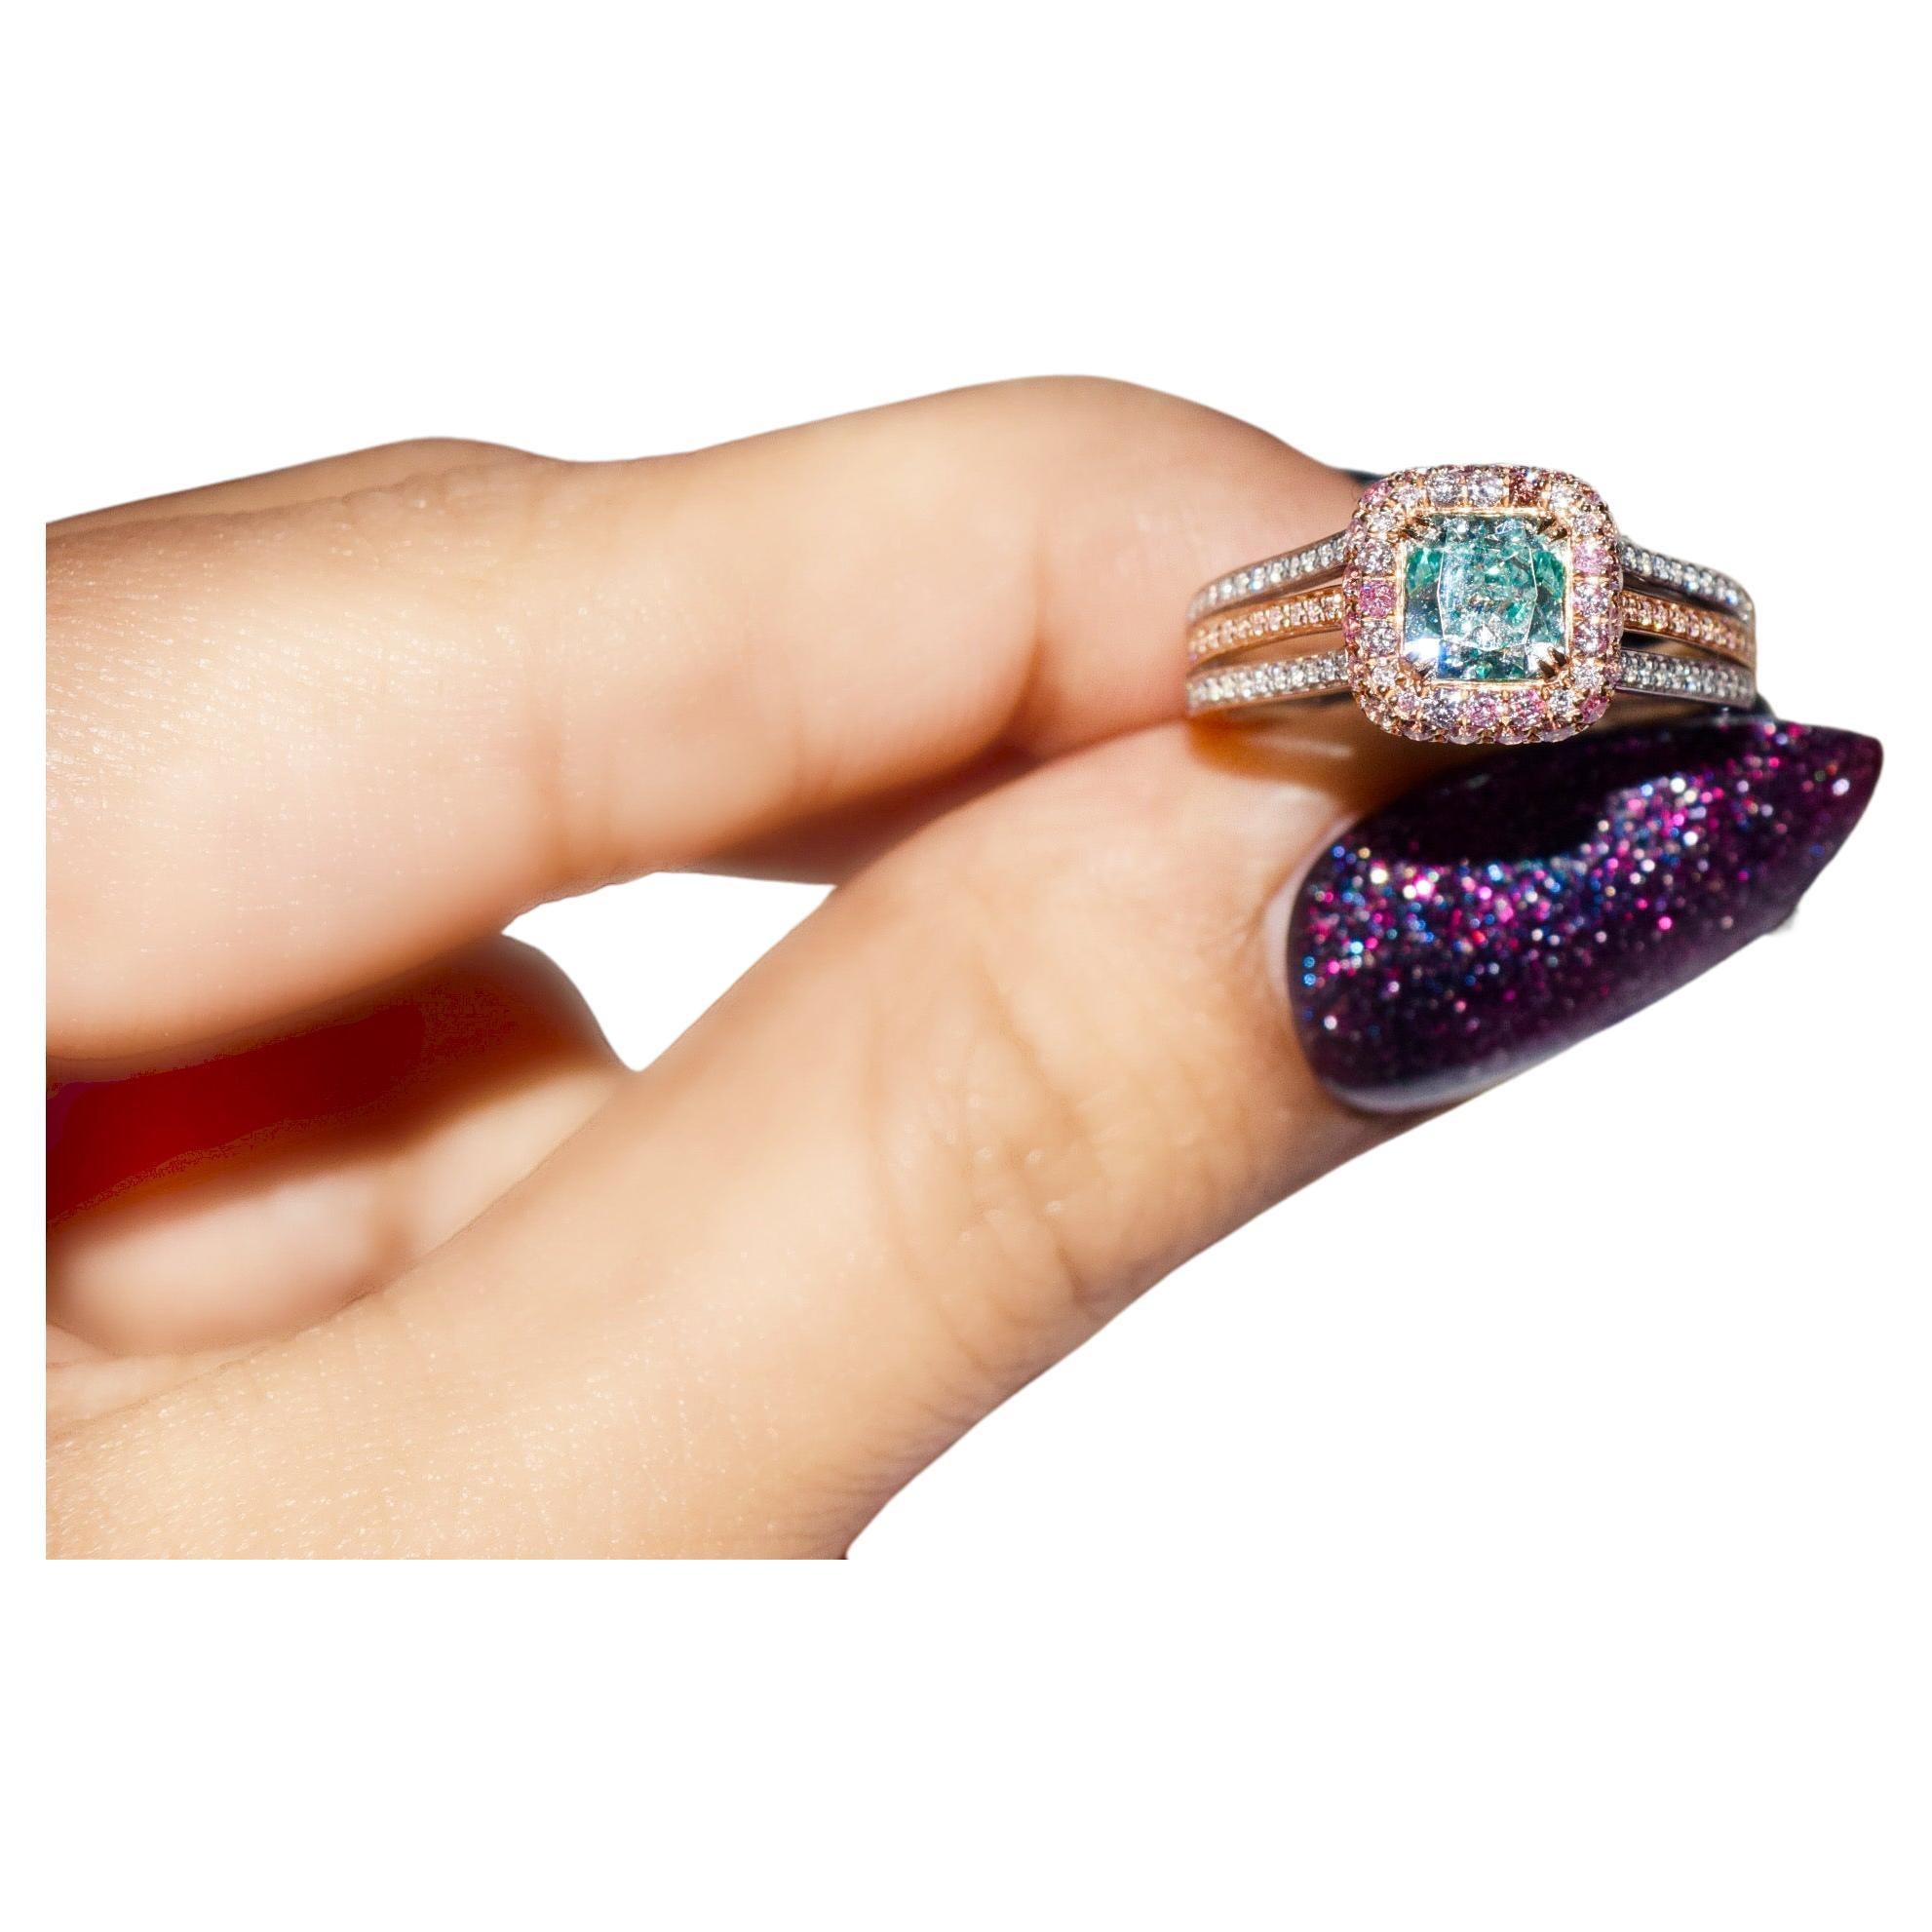 0.83 Carat Fancy Light Green Diamond Ring VS1 Clarity GIA Certified For Sale